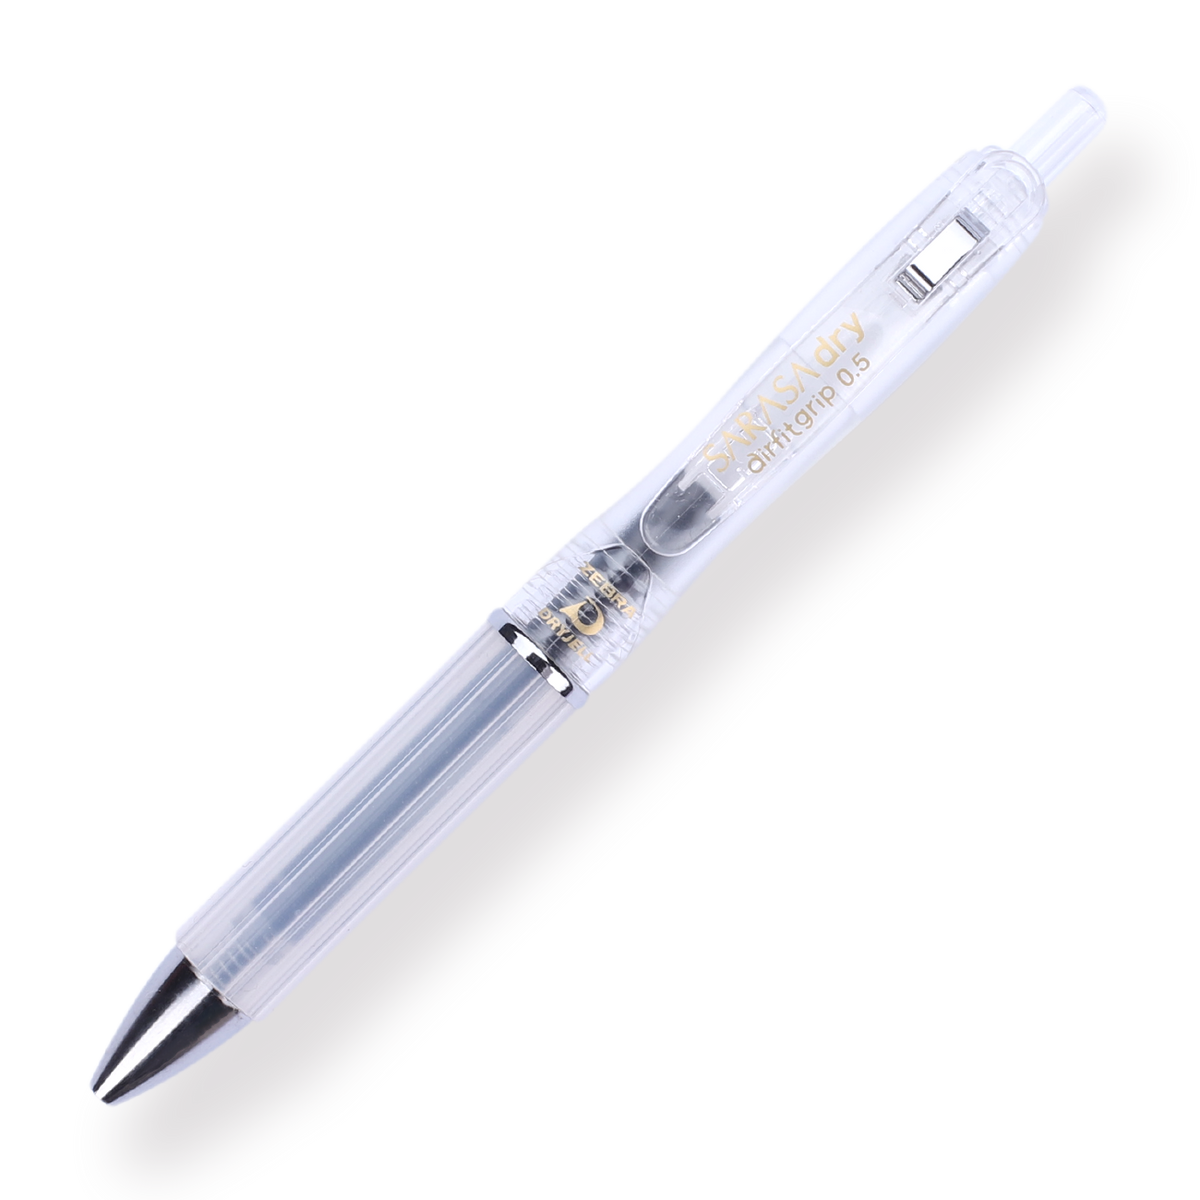 Zebra Sarasa Dry Airfit Grip Ballpoint Pen, 0.5 mm